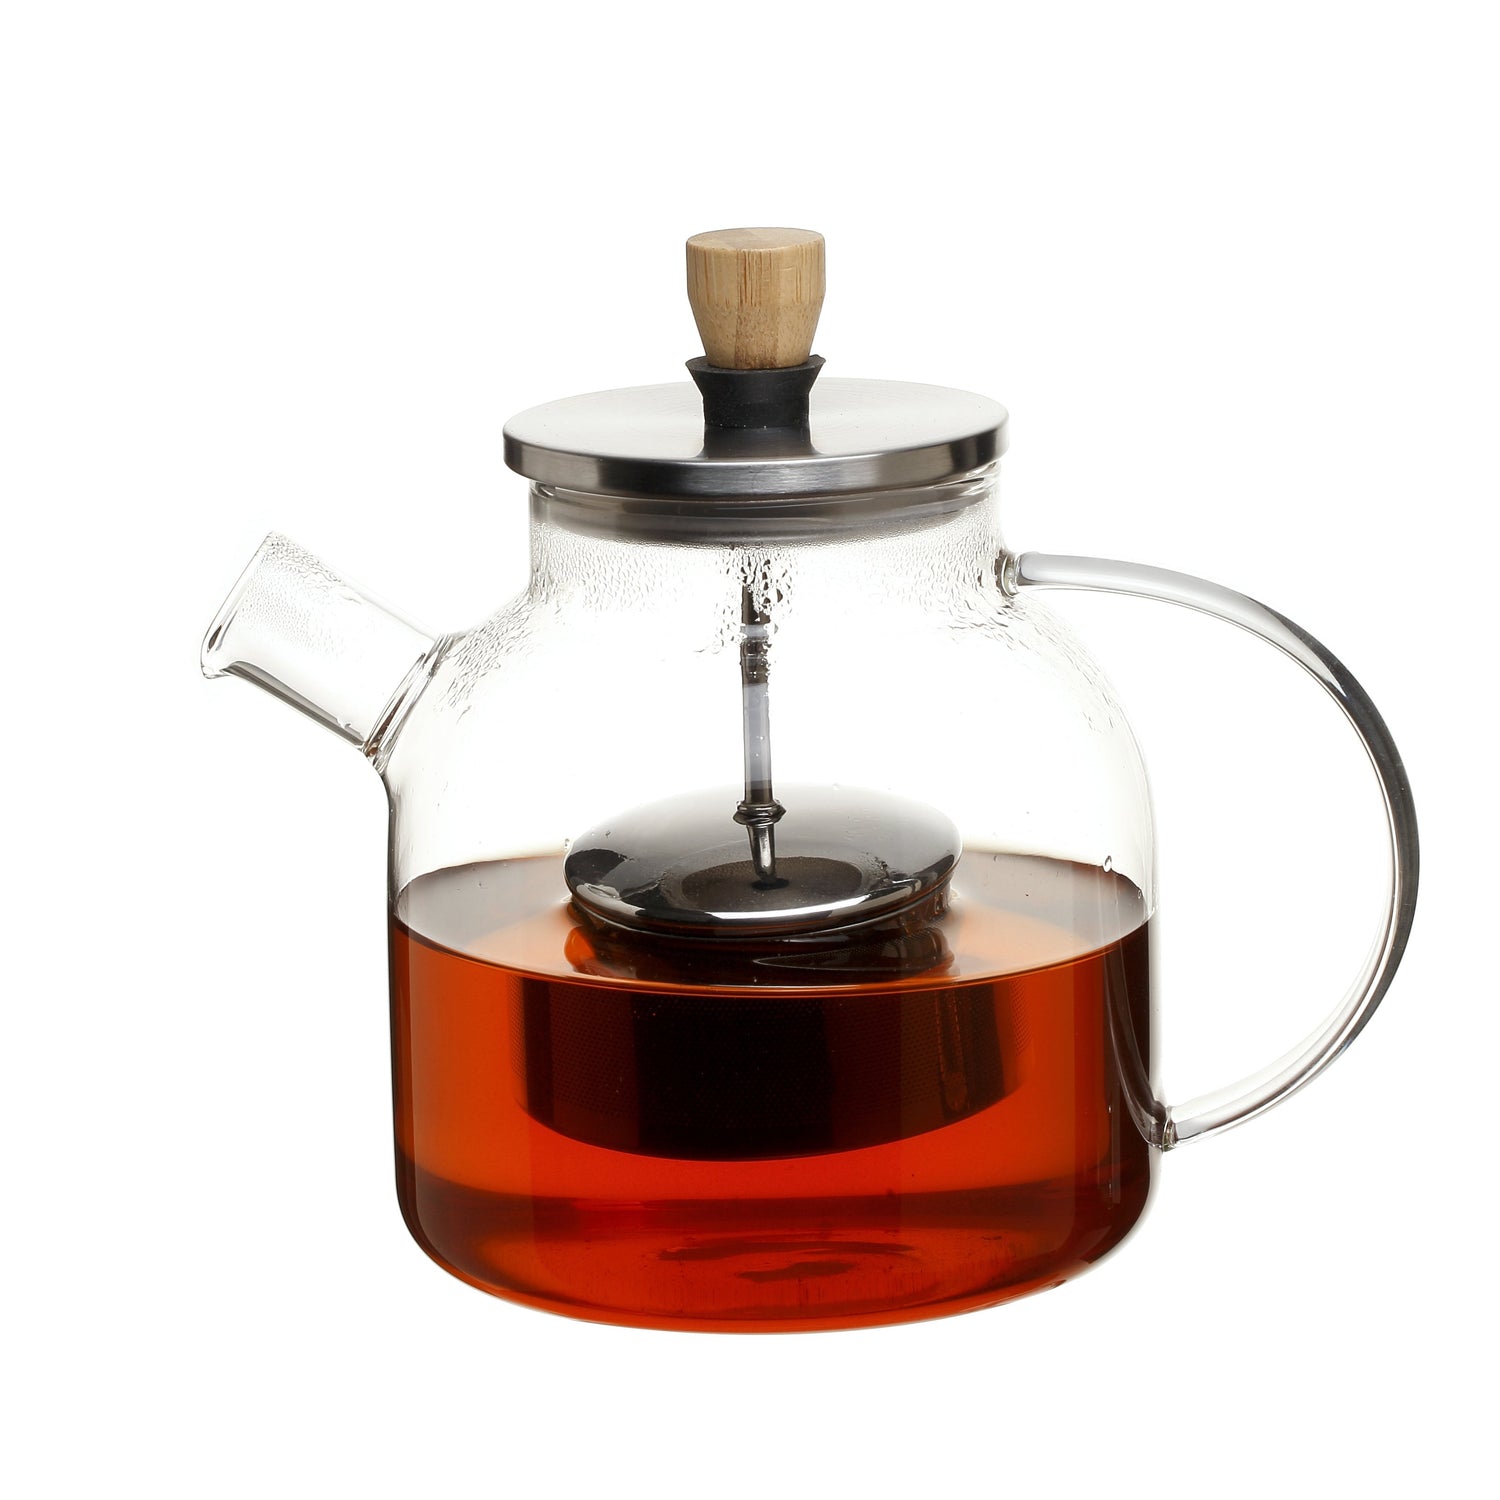 Glass carafe / coffee pot / Teapot / Lunch box